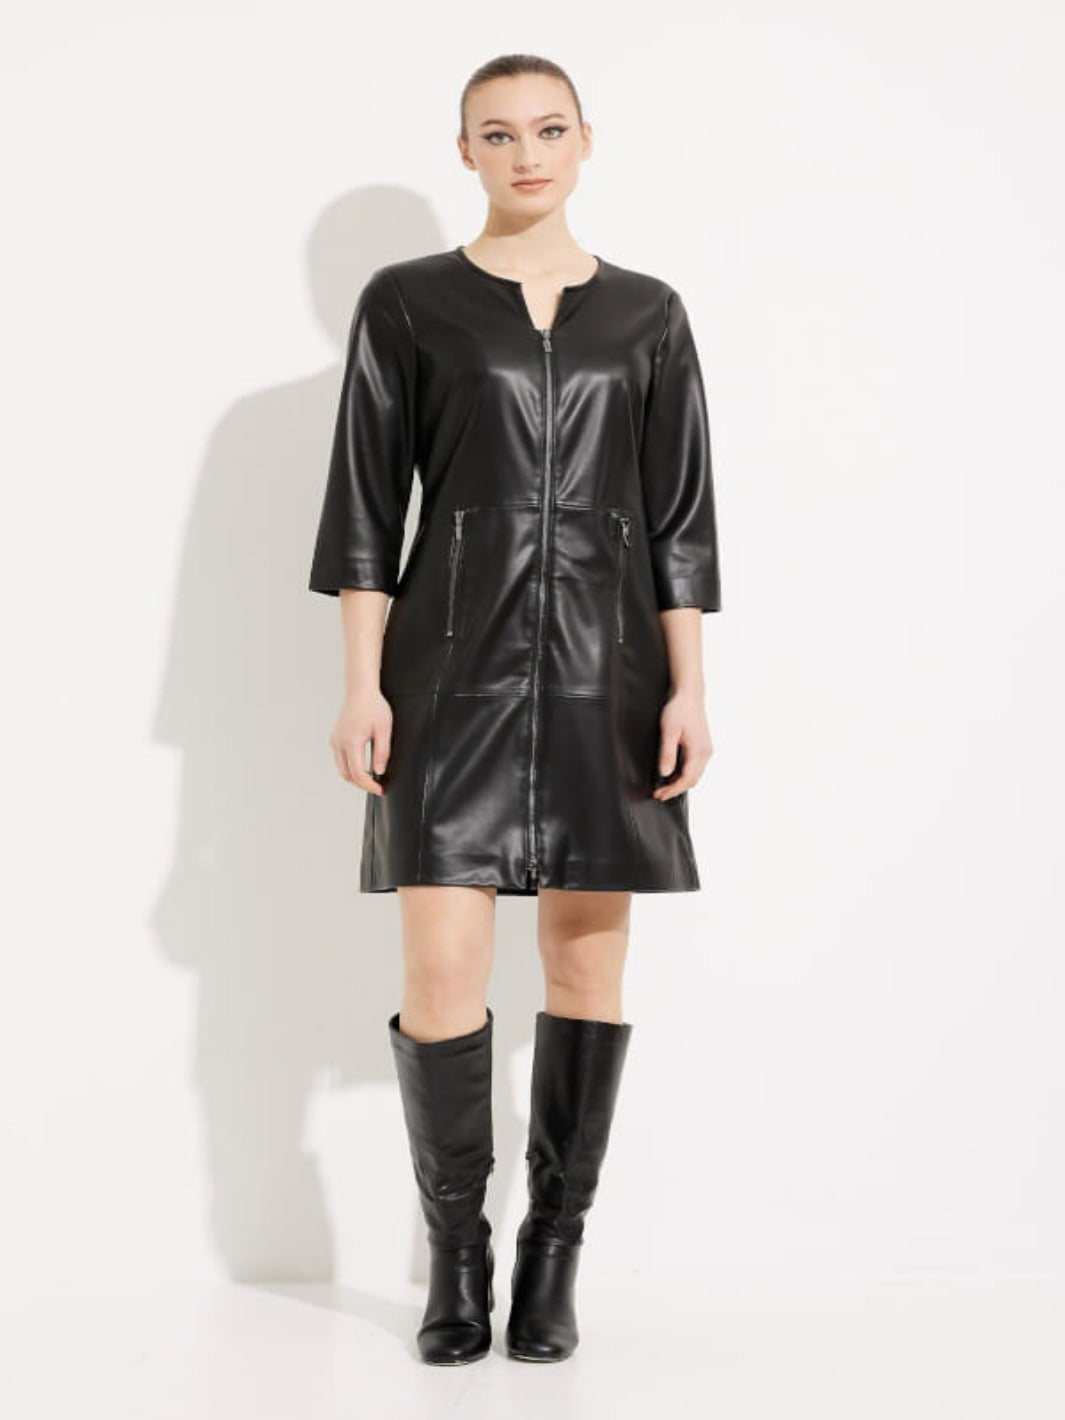 Joseph Ribkoff - Faux Leather Zip-up Dress in Black 233920-Nicola Ross